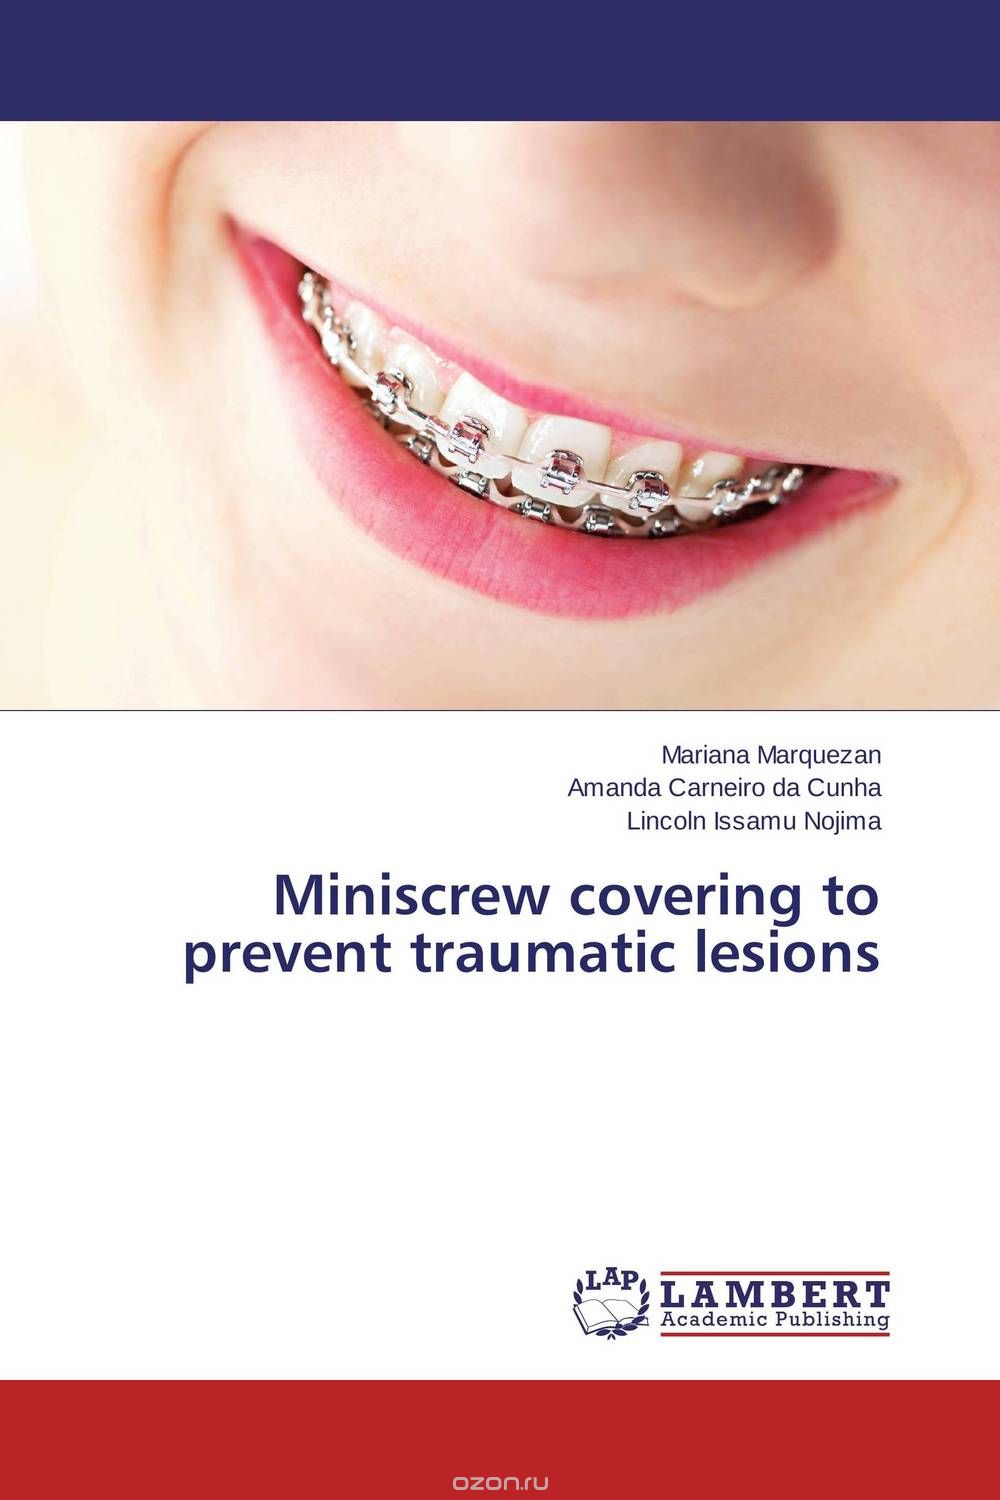 Скачать книгу "Miniscrew covering to prevent traumatic lesions"